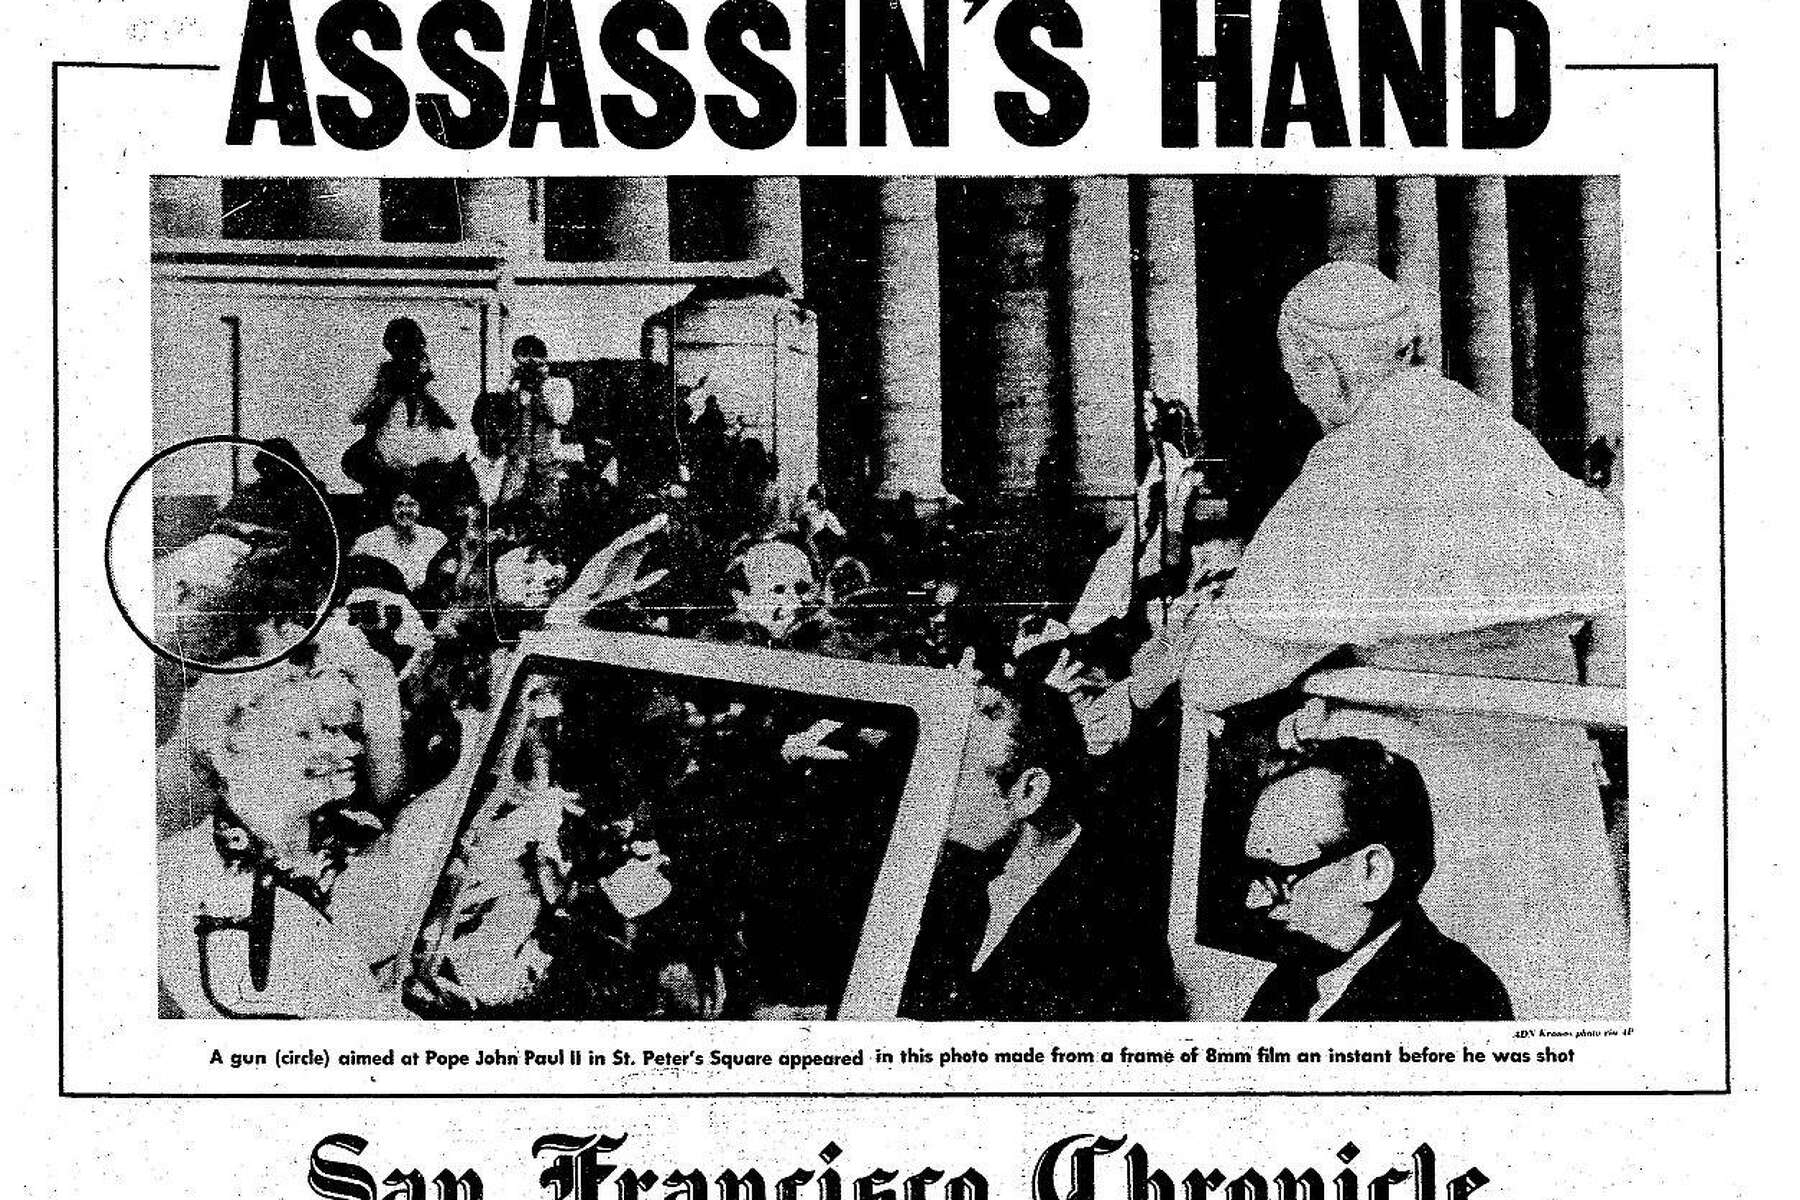 Chronicle Covers: When Pope John Paul II was shot in Vatican City